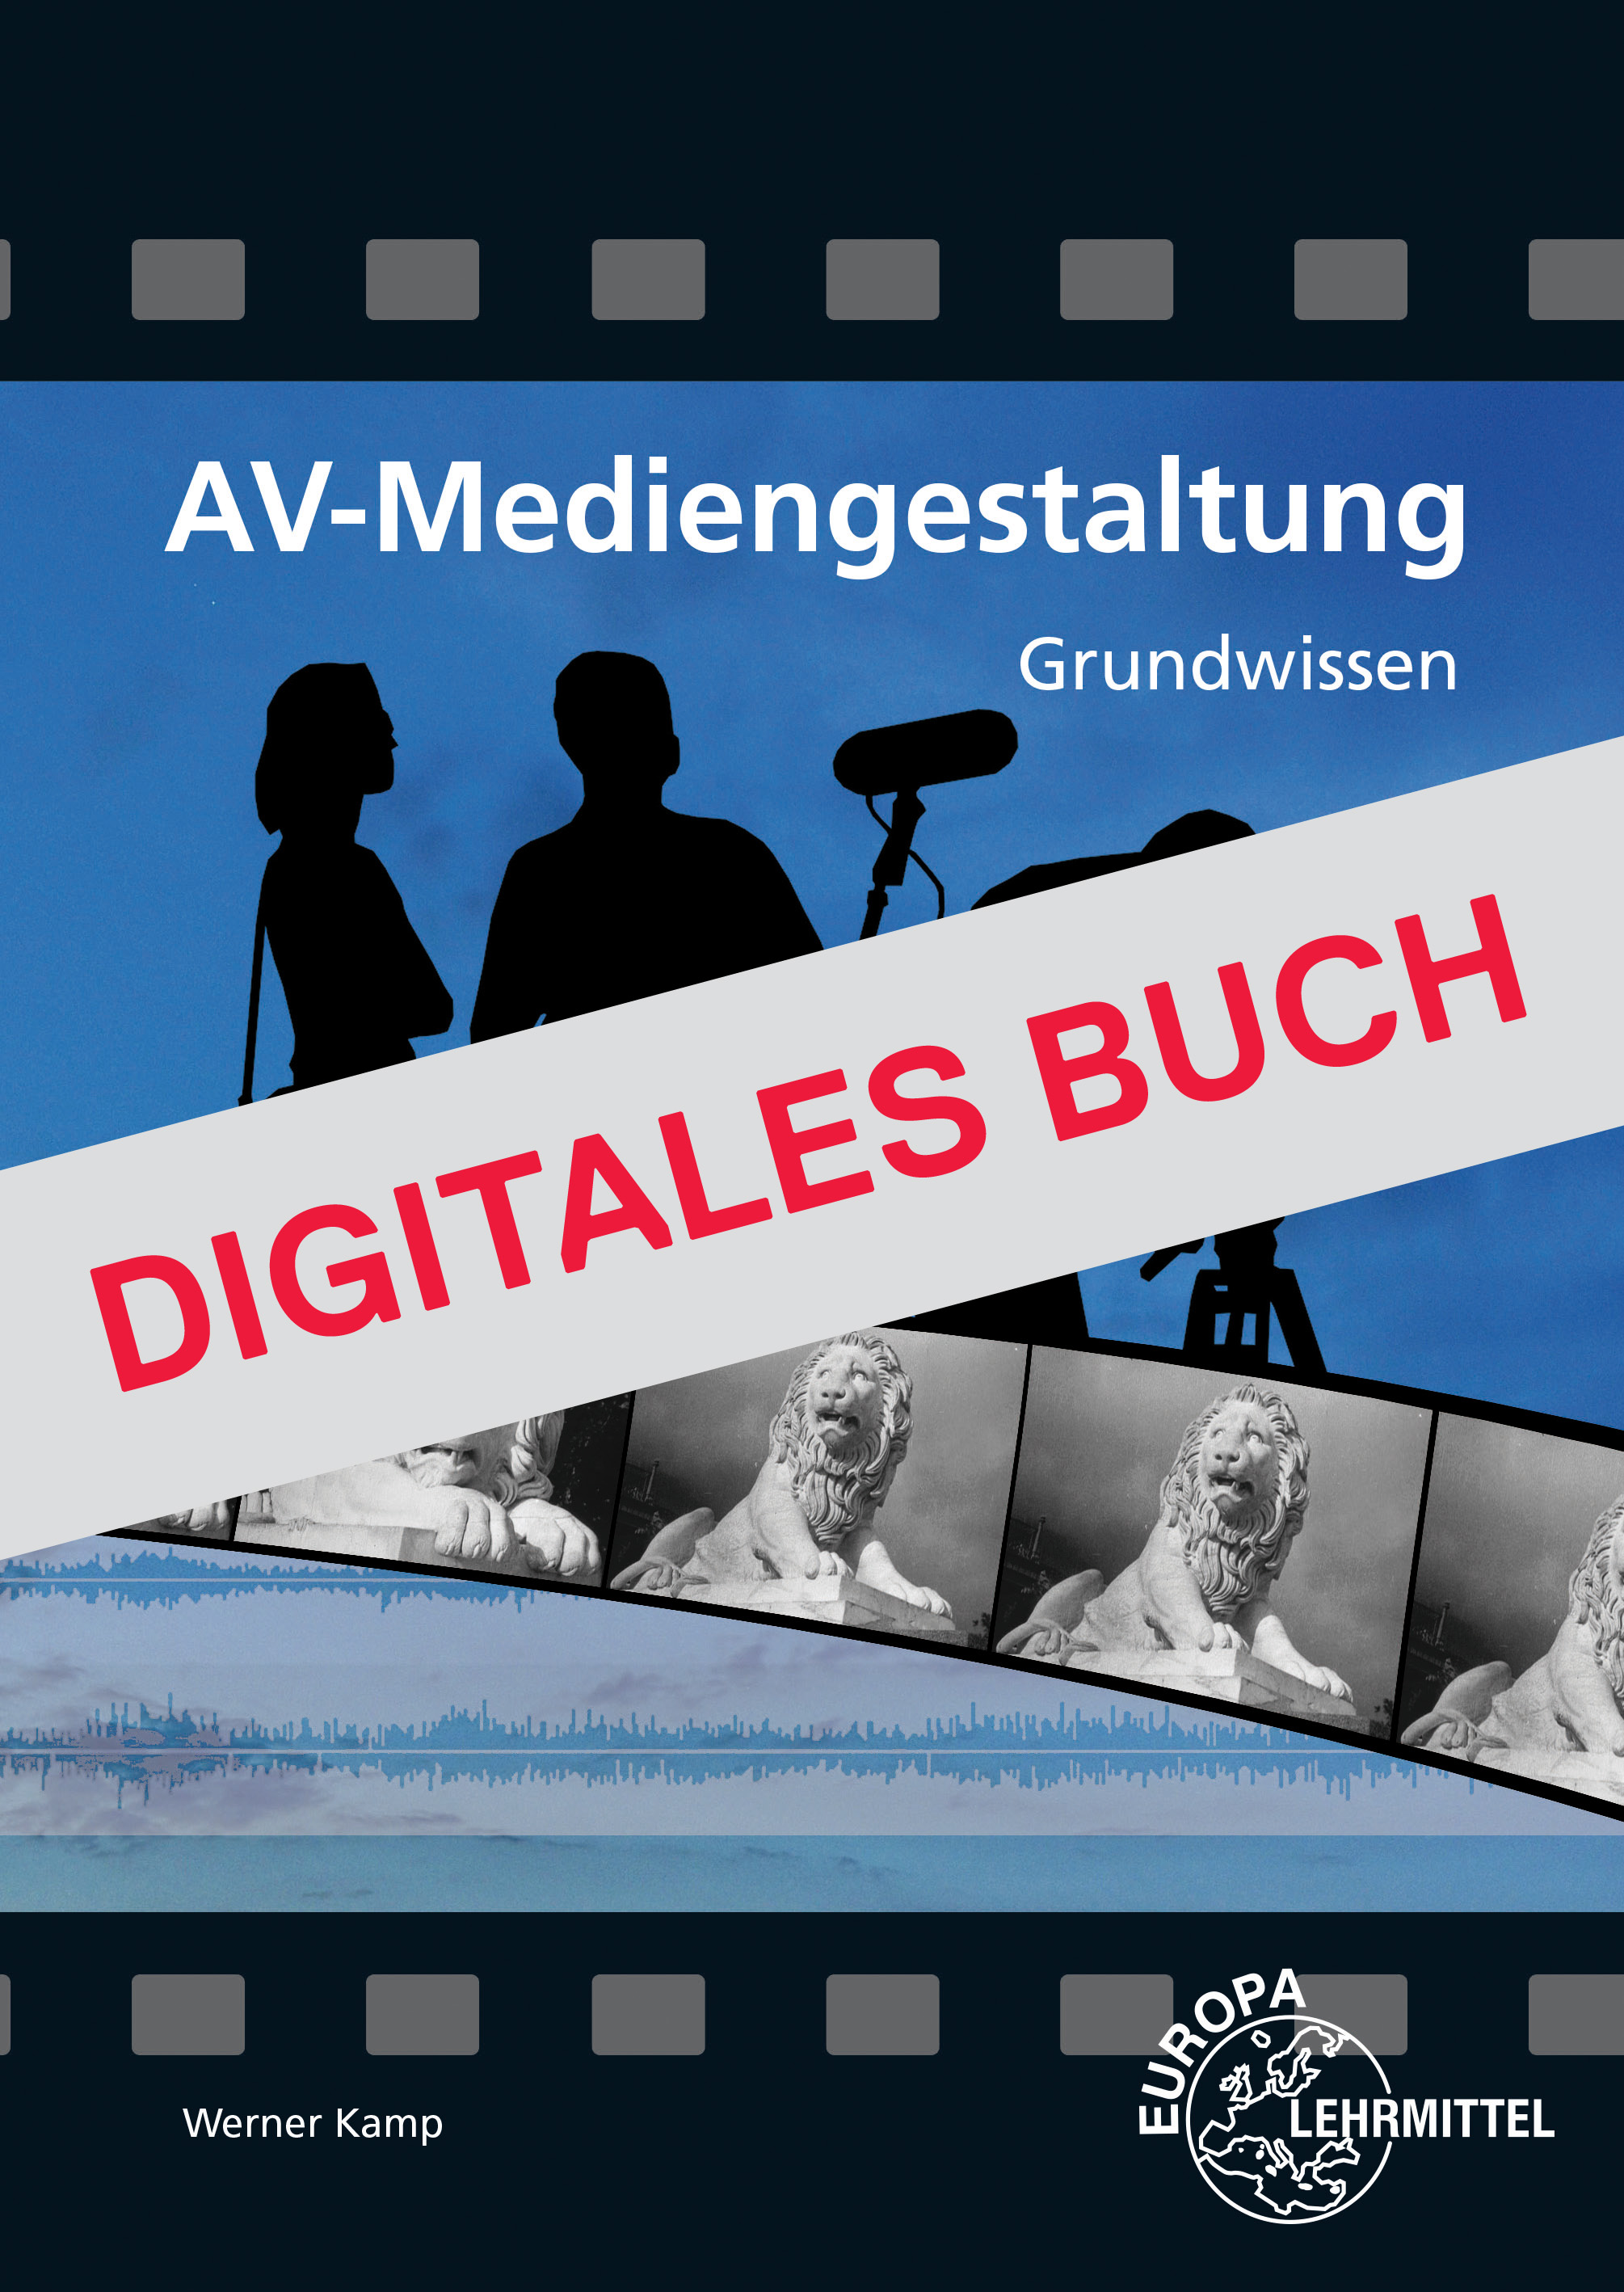 AV-Mediengestaltung Grundwissen - Digitales Buch